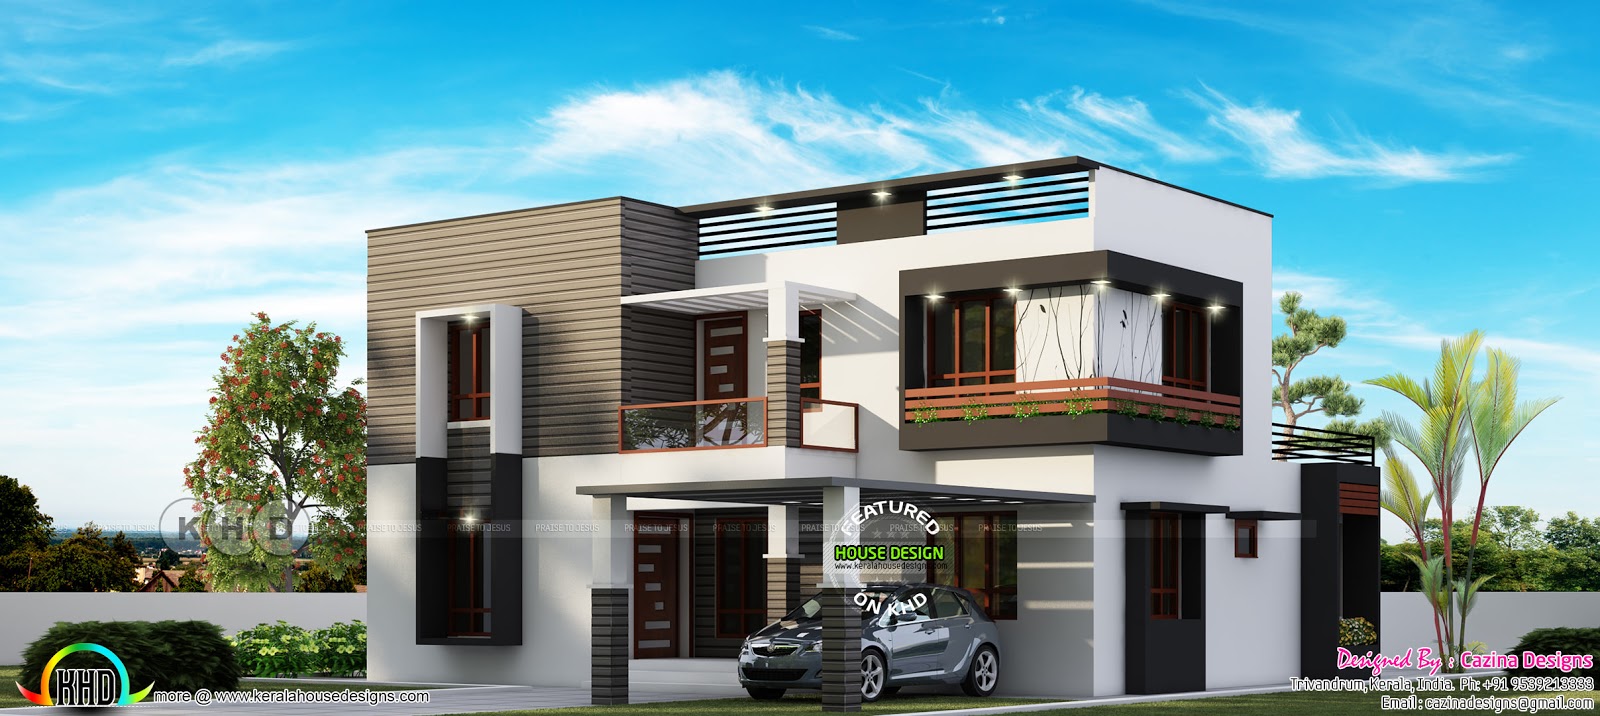  4  bedroom  modern  flat roof  house  2600 sq ft Kerala home  